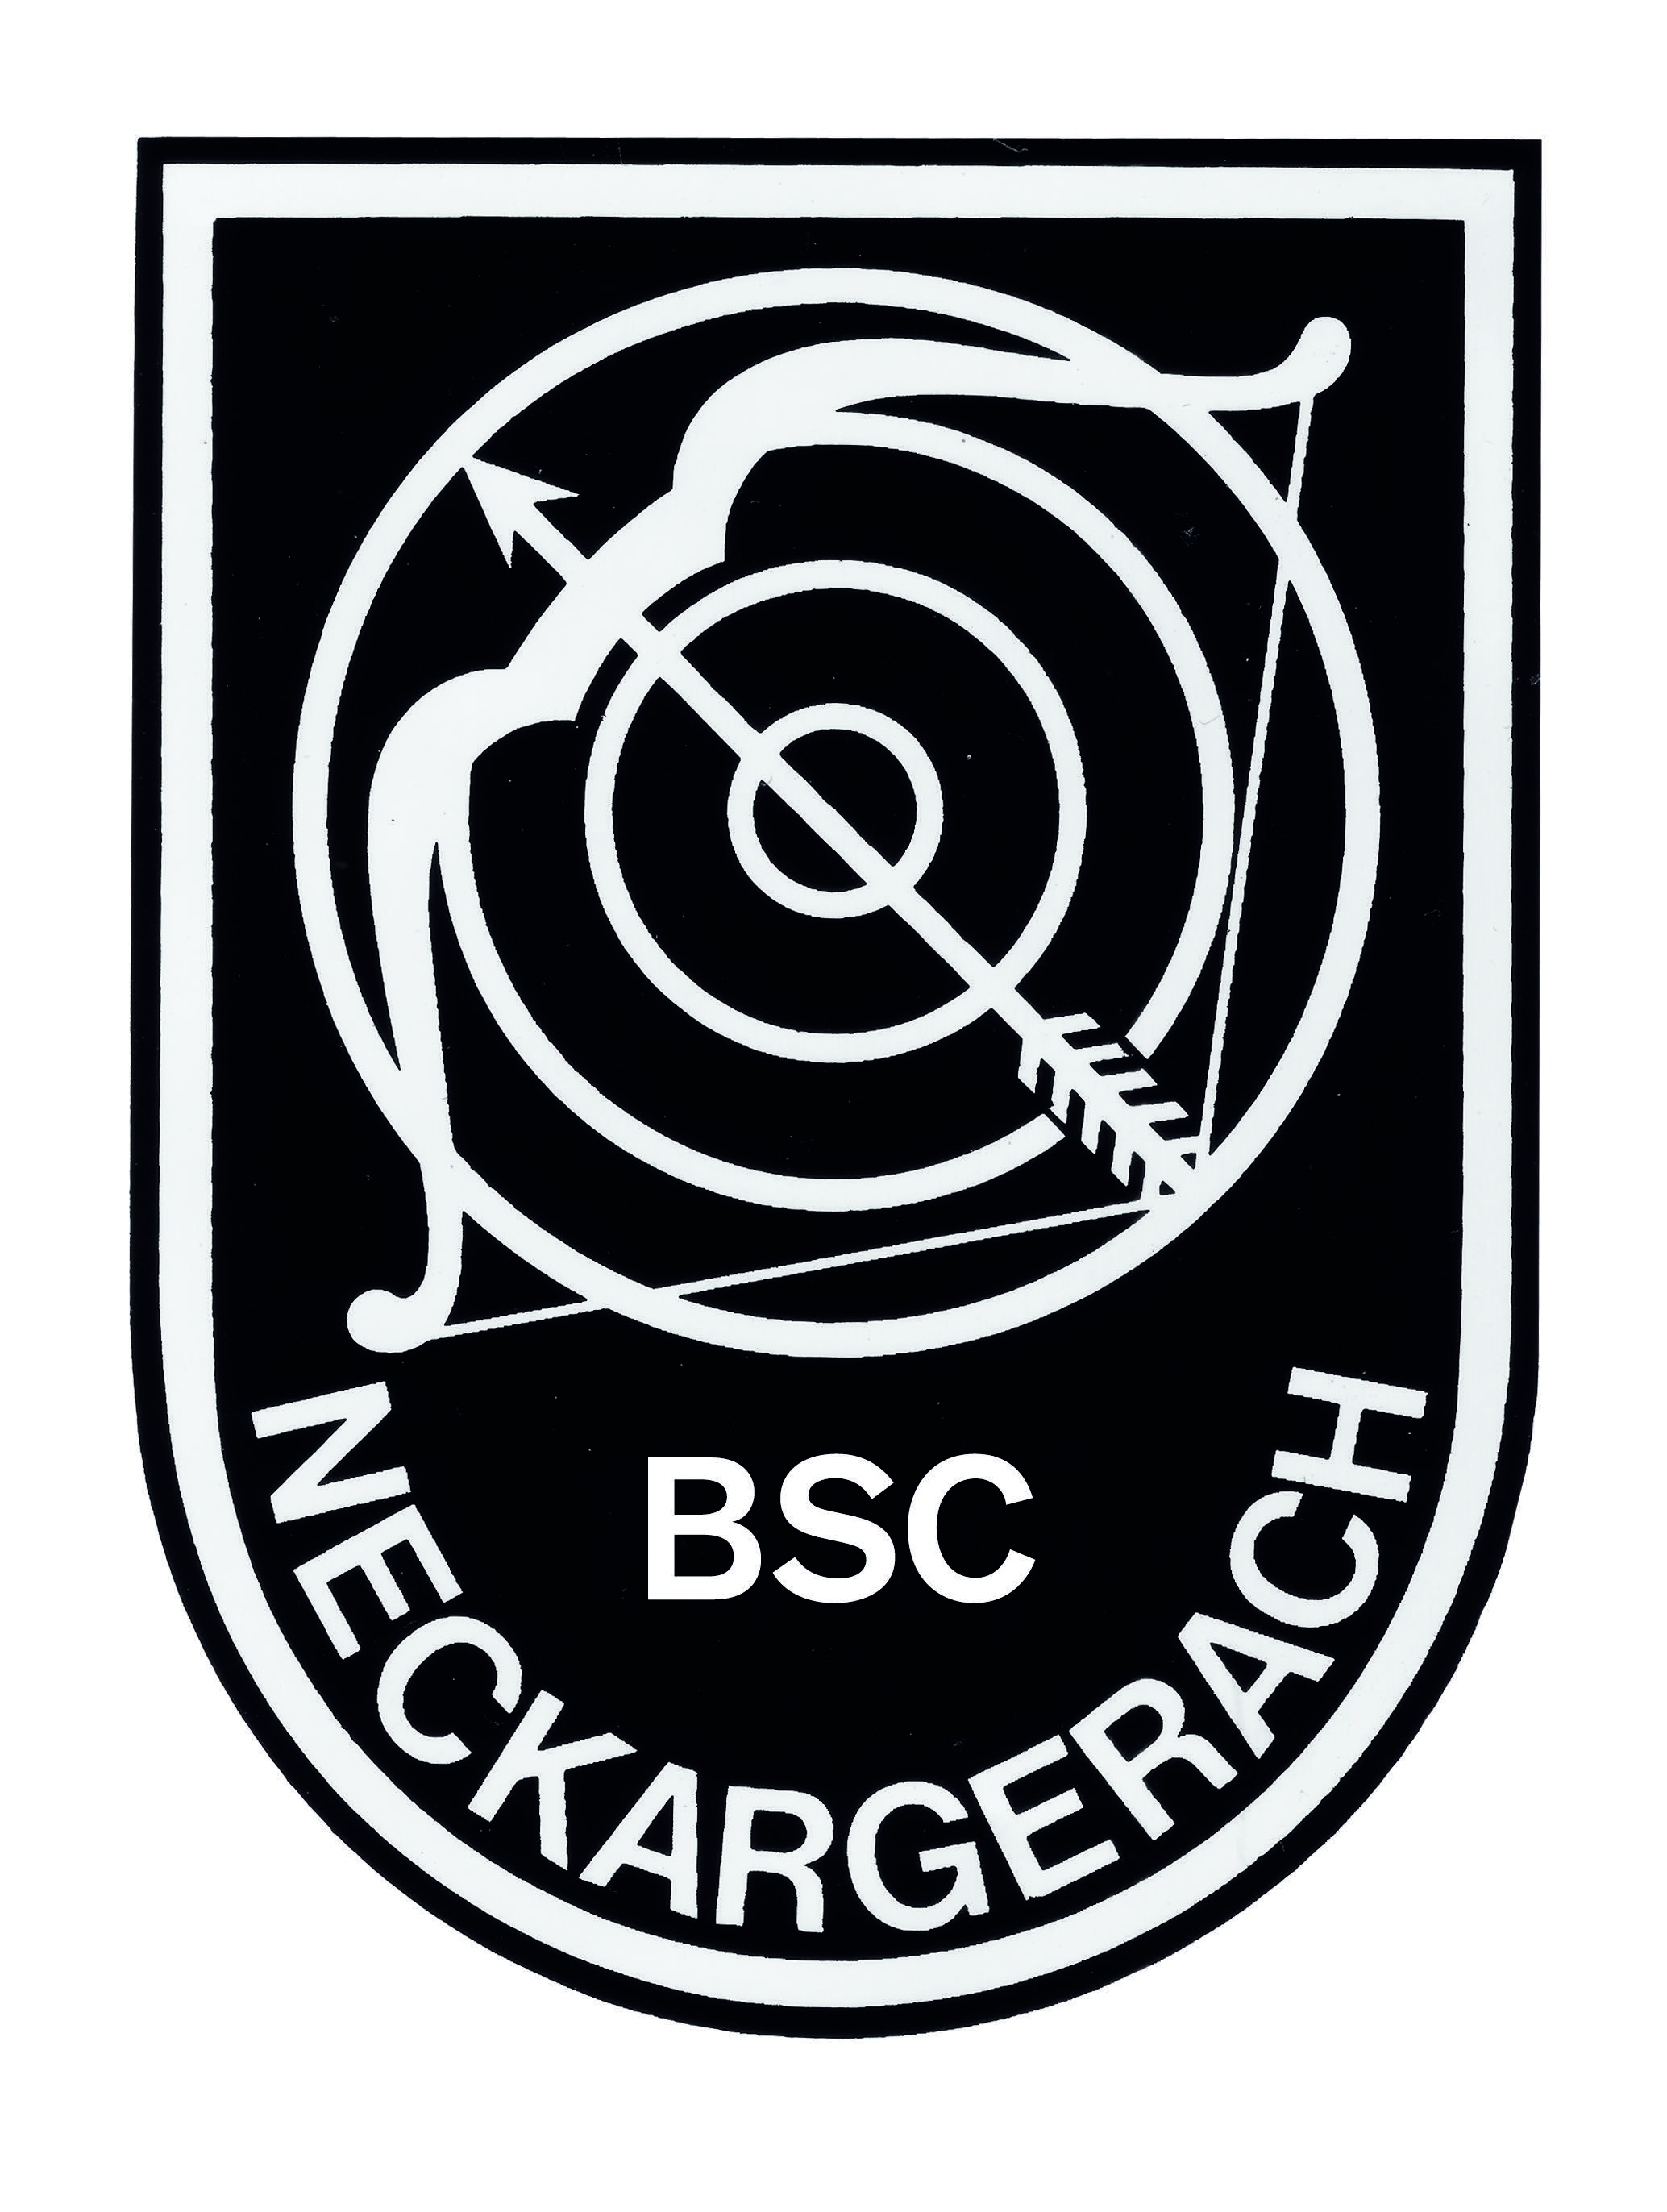 BSC-Logo / Vereinslogo des BSC Neckargerach